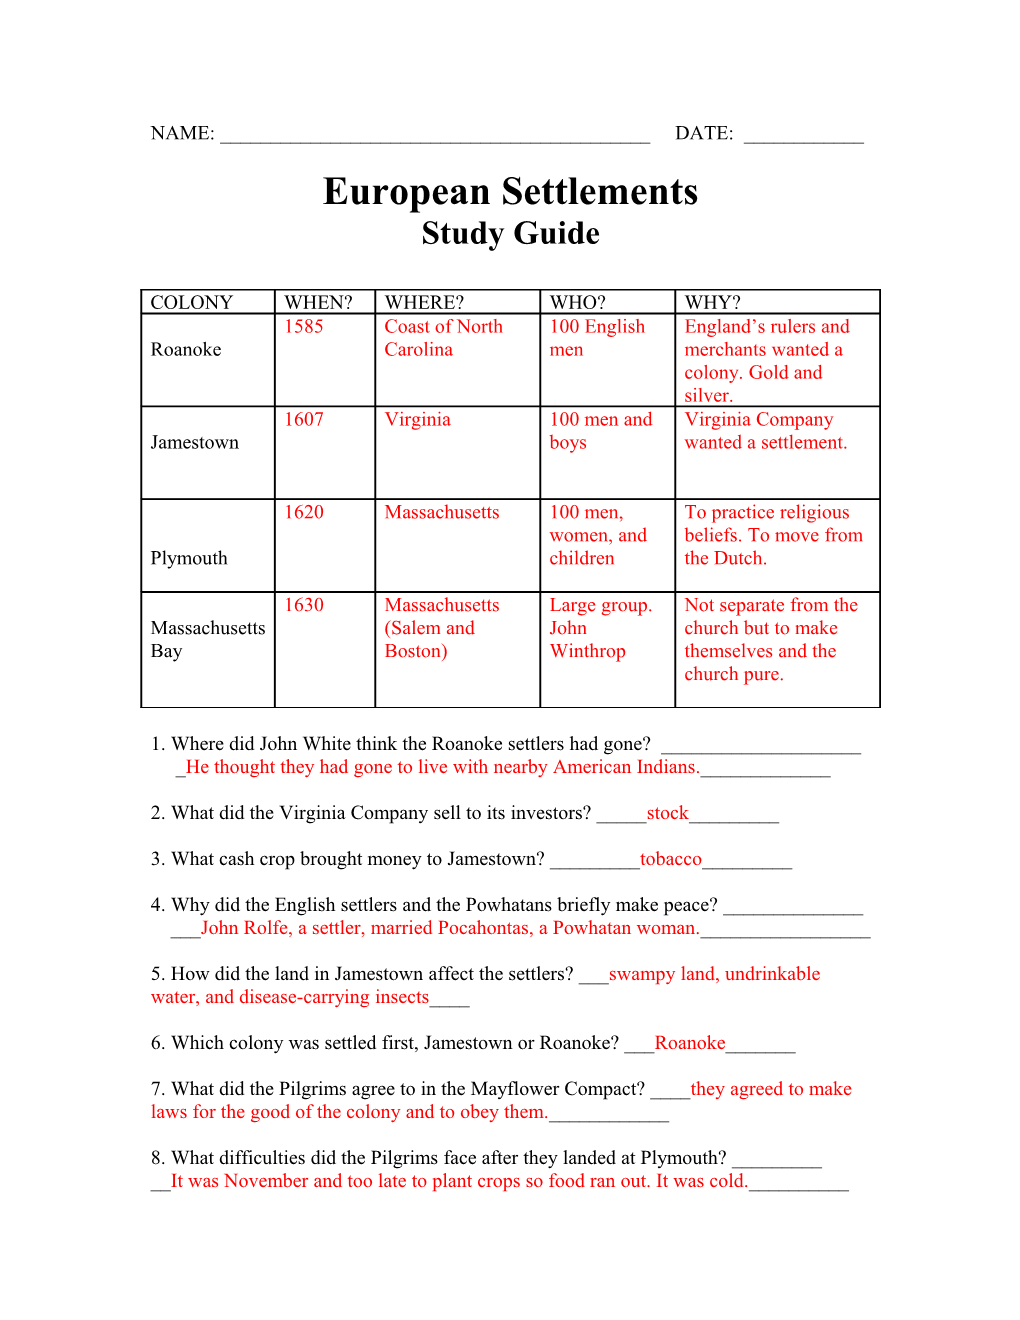 European Settlements